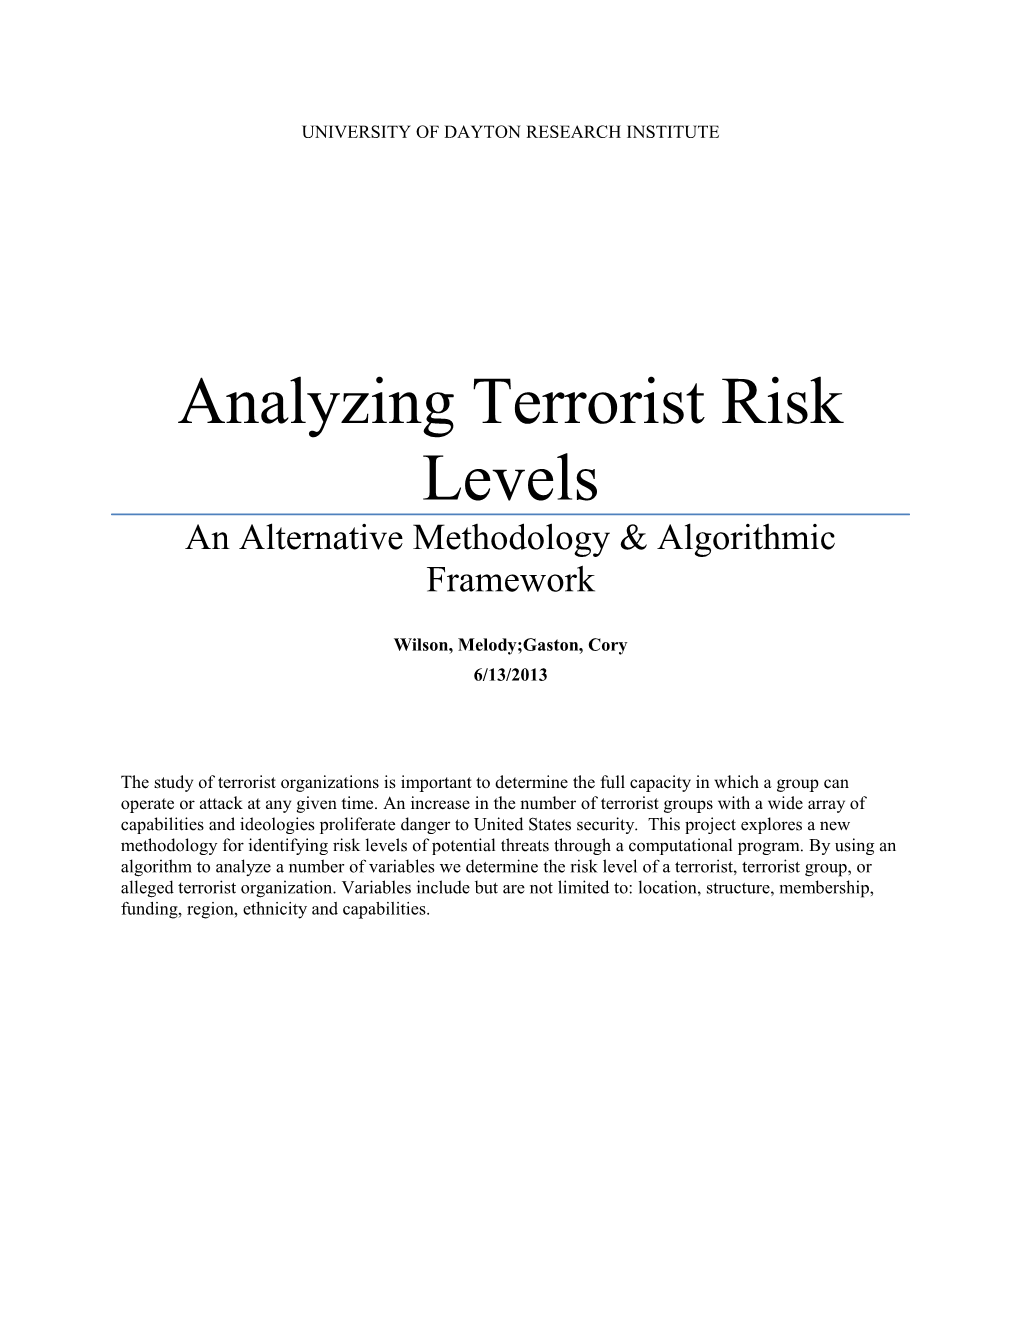 Analyzing Terrorist Risk Levels